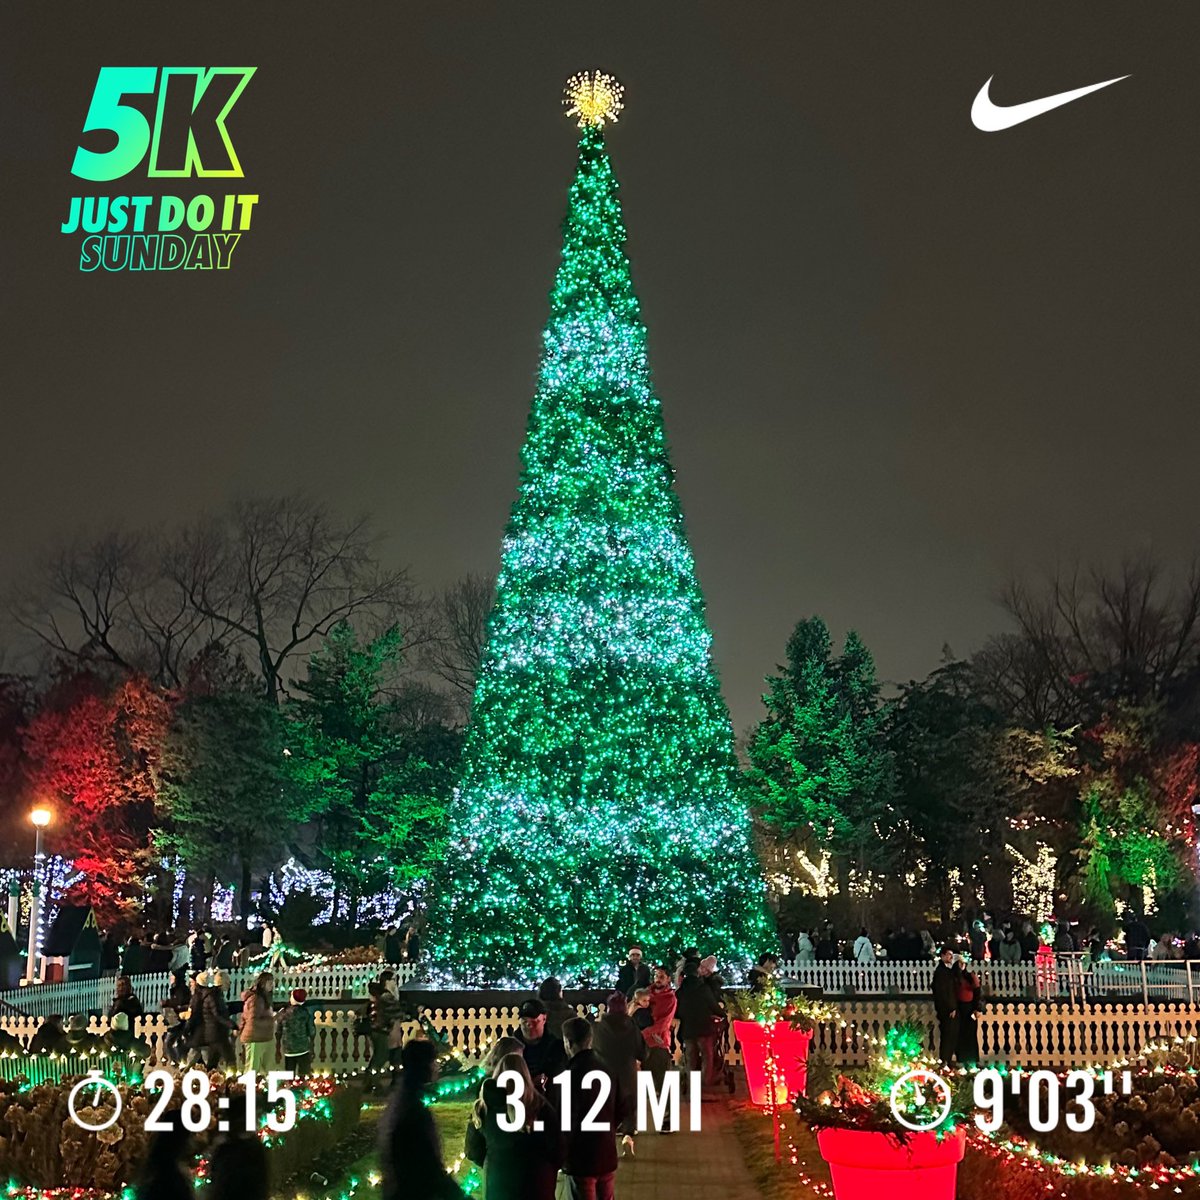 Christmas Eve Run complete! Another 5K in the bag! 👟😀

#Running #Runner #Run #HOKA #NRC #5Ktraining #Fitness #NikeRunClub #JustDoIt #5Krun #TrainingRun #CanadaRuns #NoExcuses #FitLife #HolidayLights